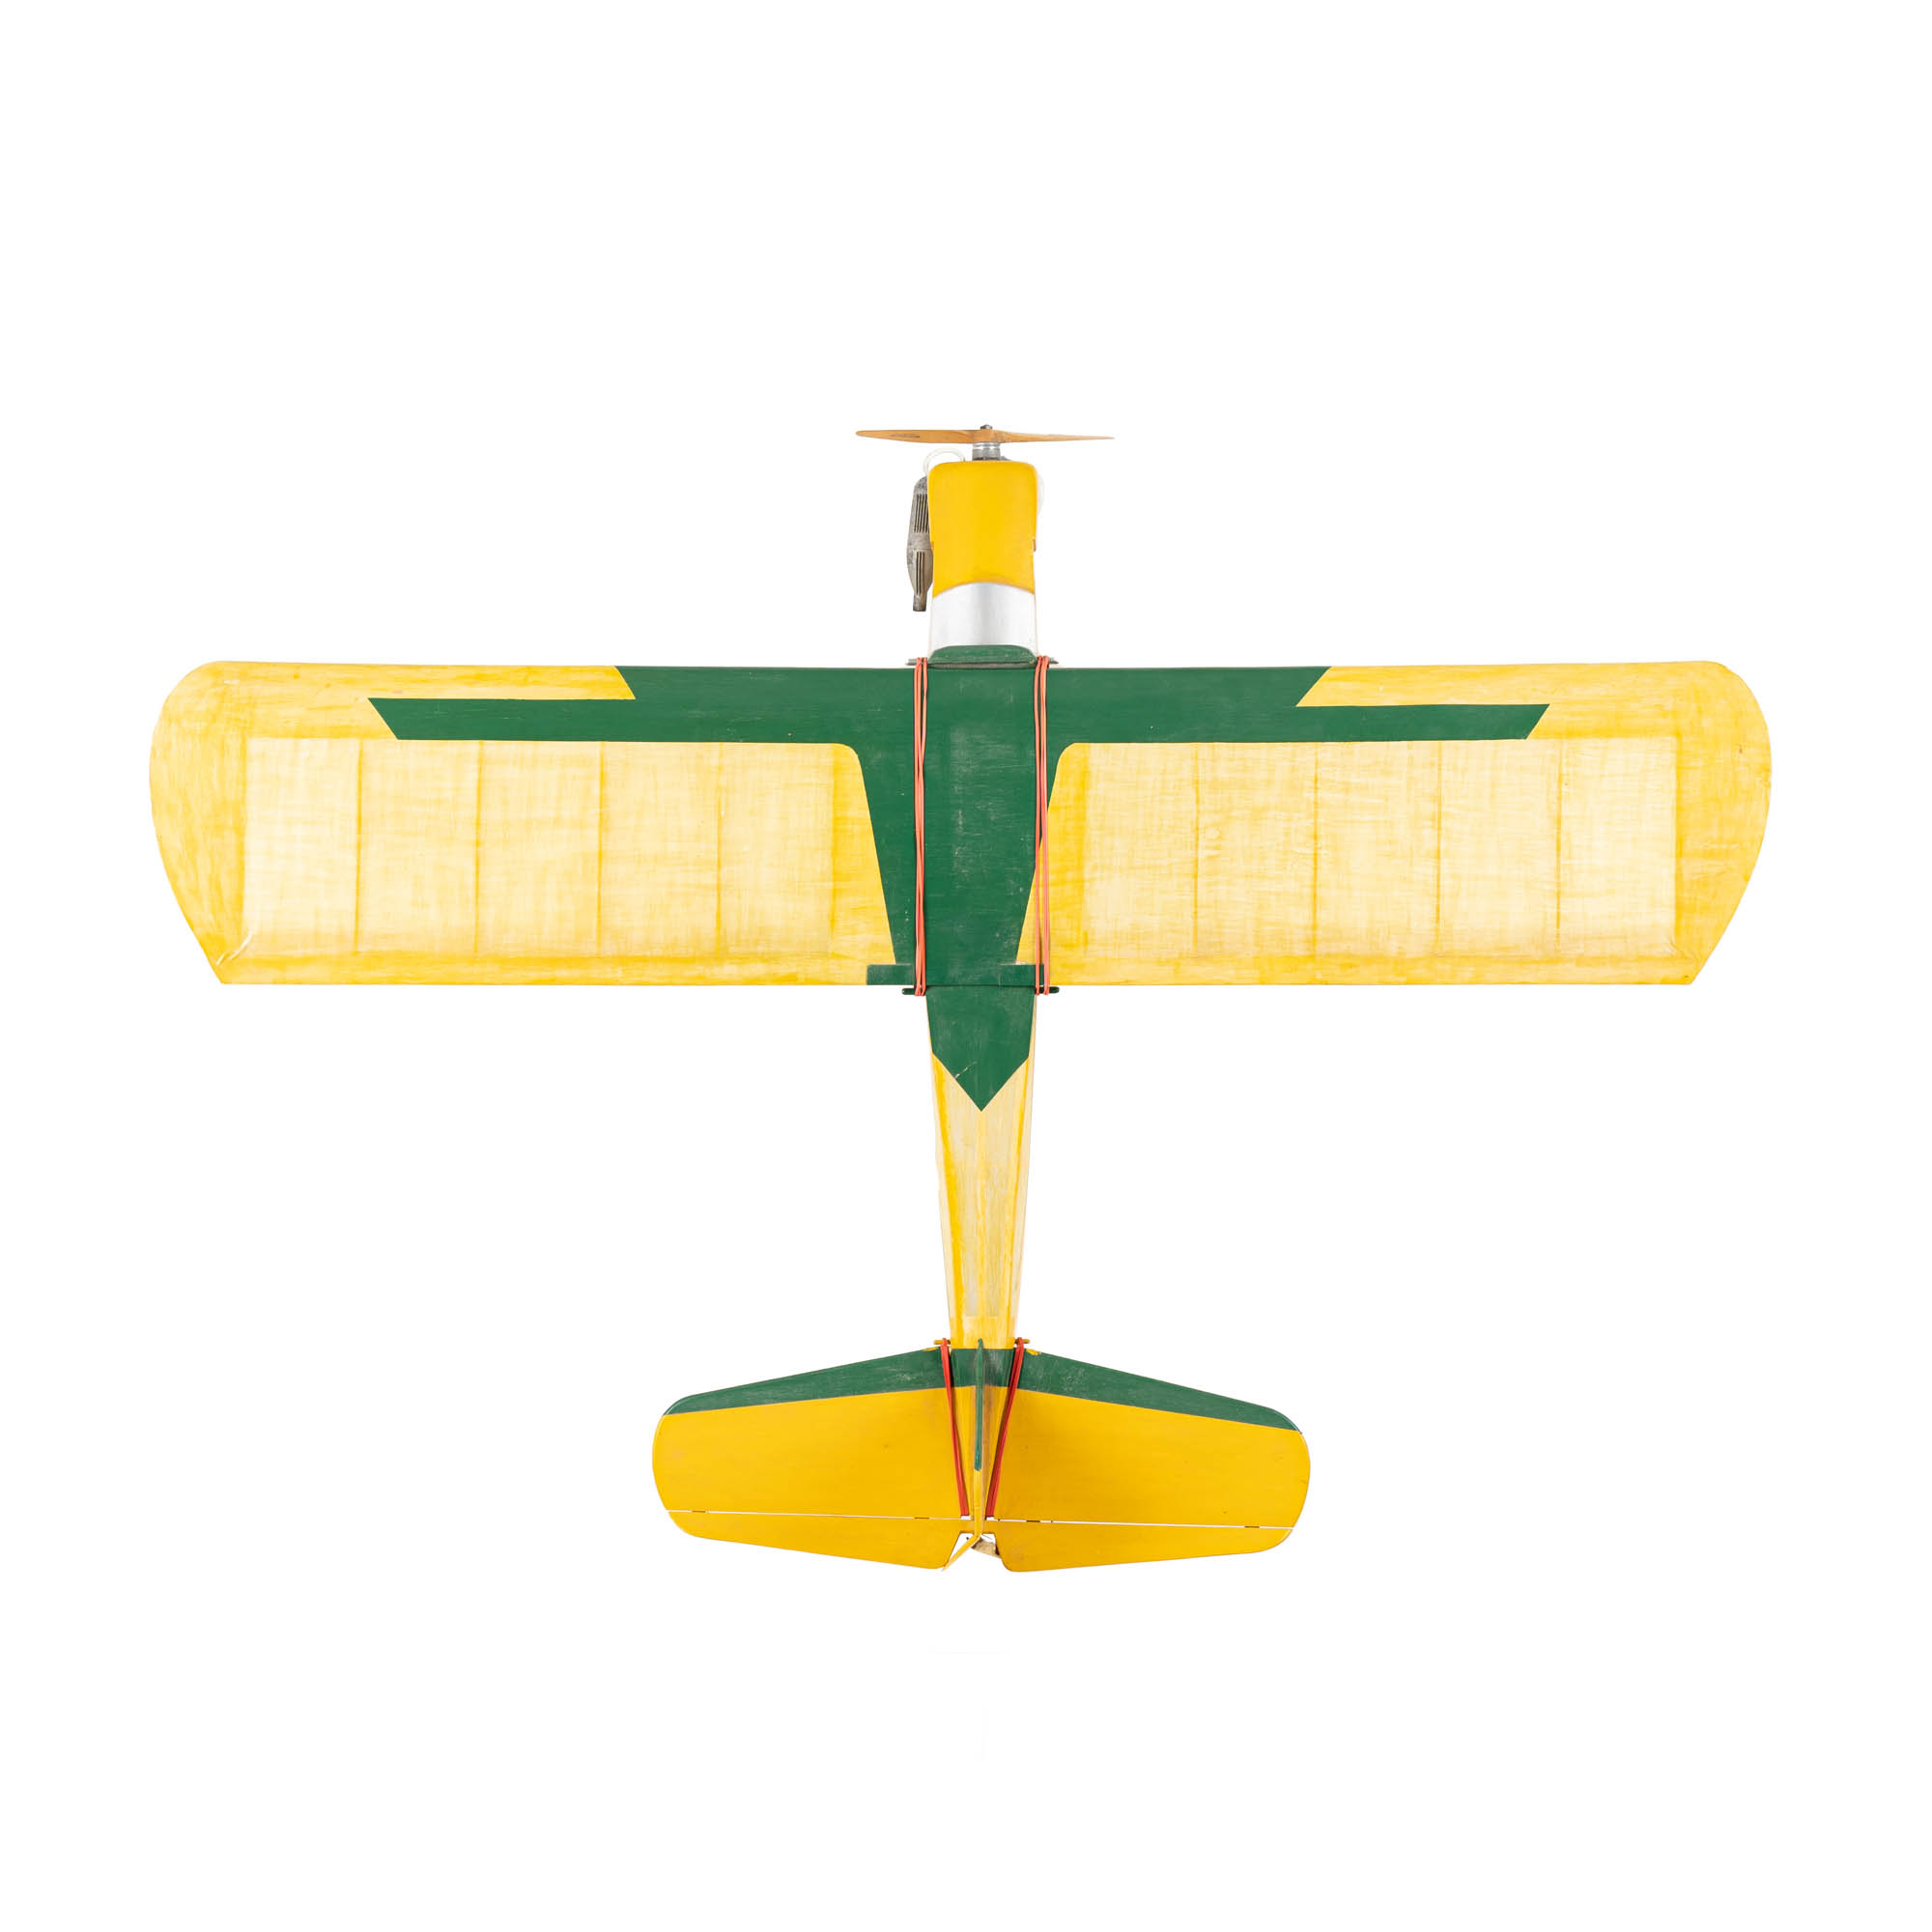 Vintage Yellow Airplane Model